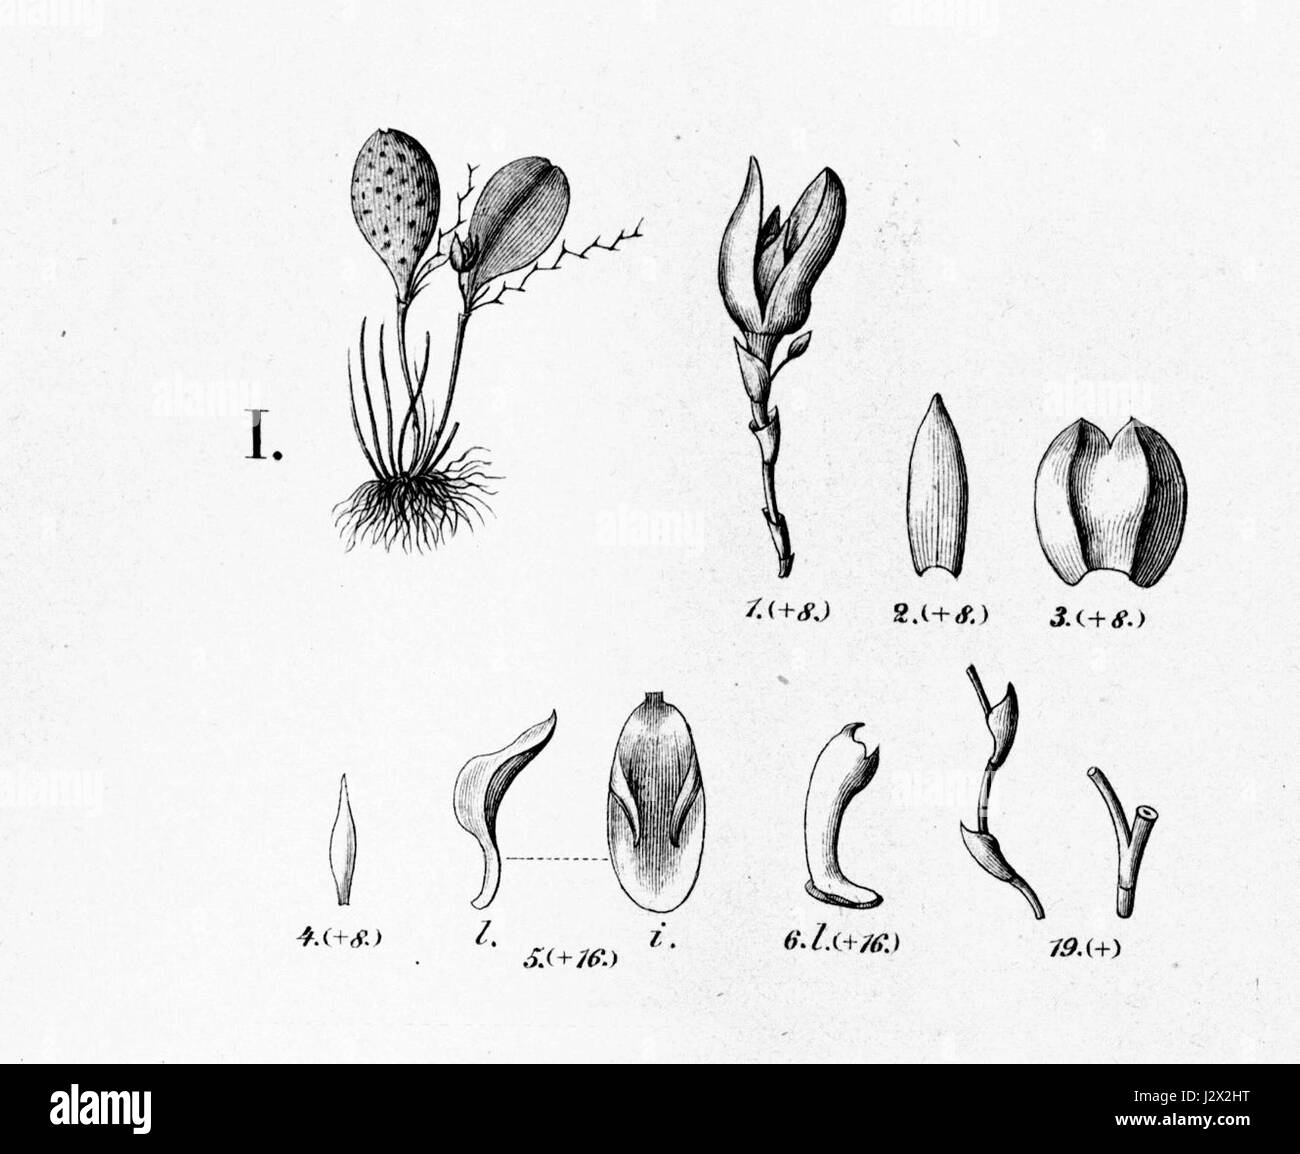 Acianthera serpentula (as Pleurothallis punctata) - cutout from Fl.Br.3-4-92 Stock Photo